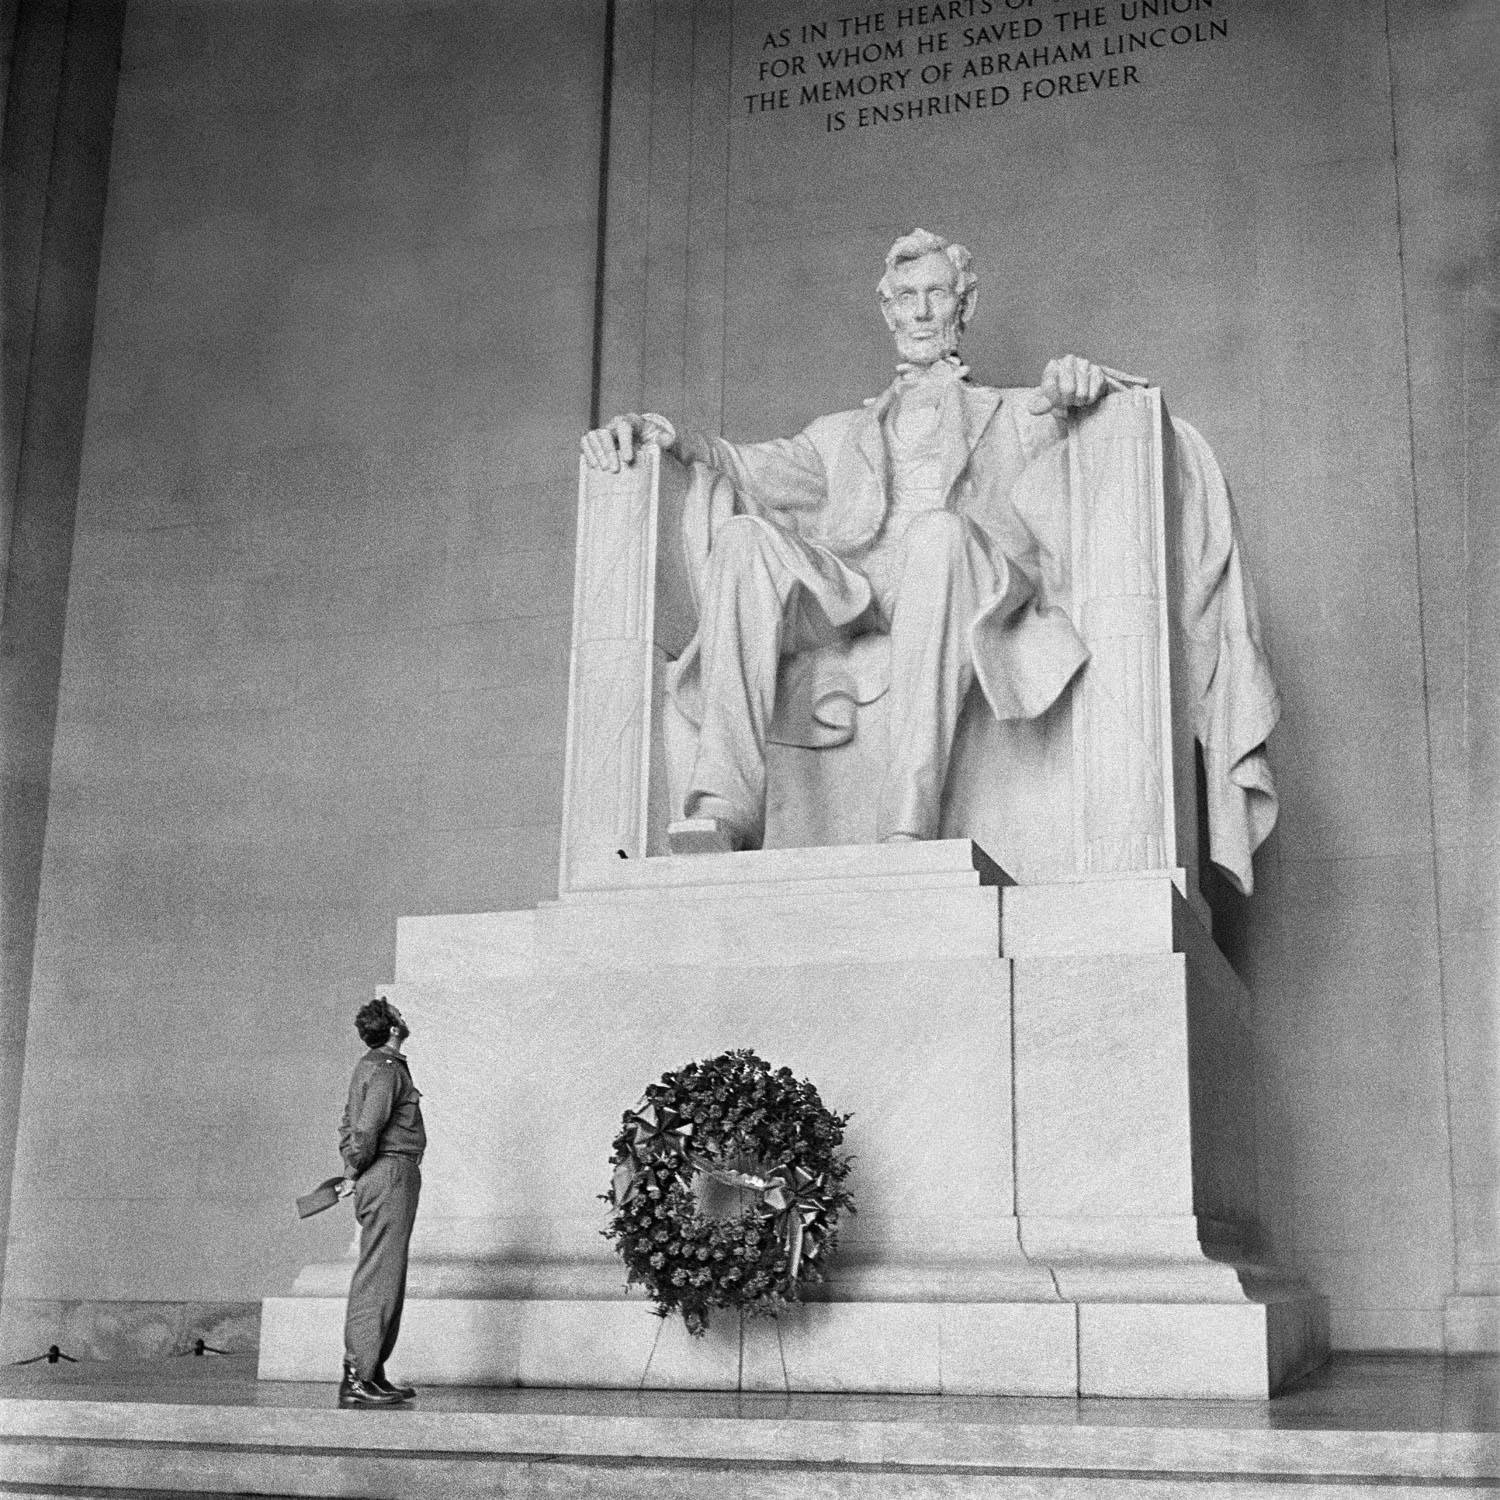 Alberto Korda Black and White Photograph - David & Goliath, Abraham Lincoln Memorial, Washington. Sunday, April 19, 1959